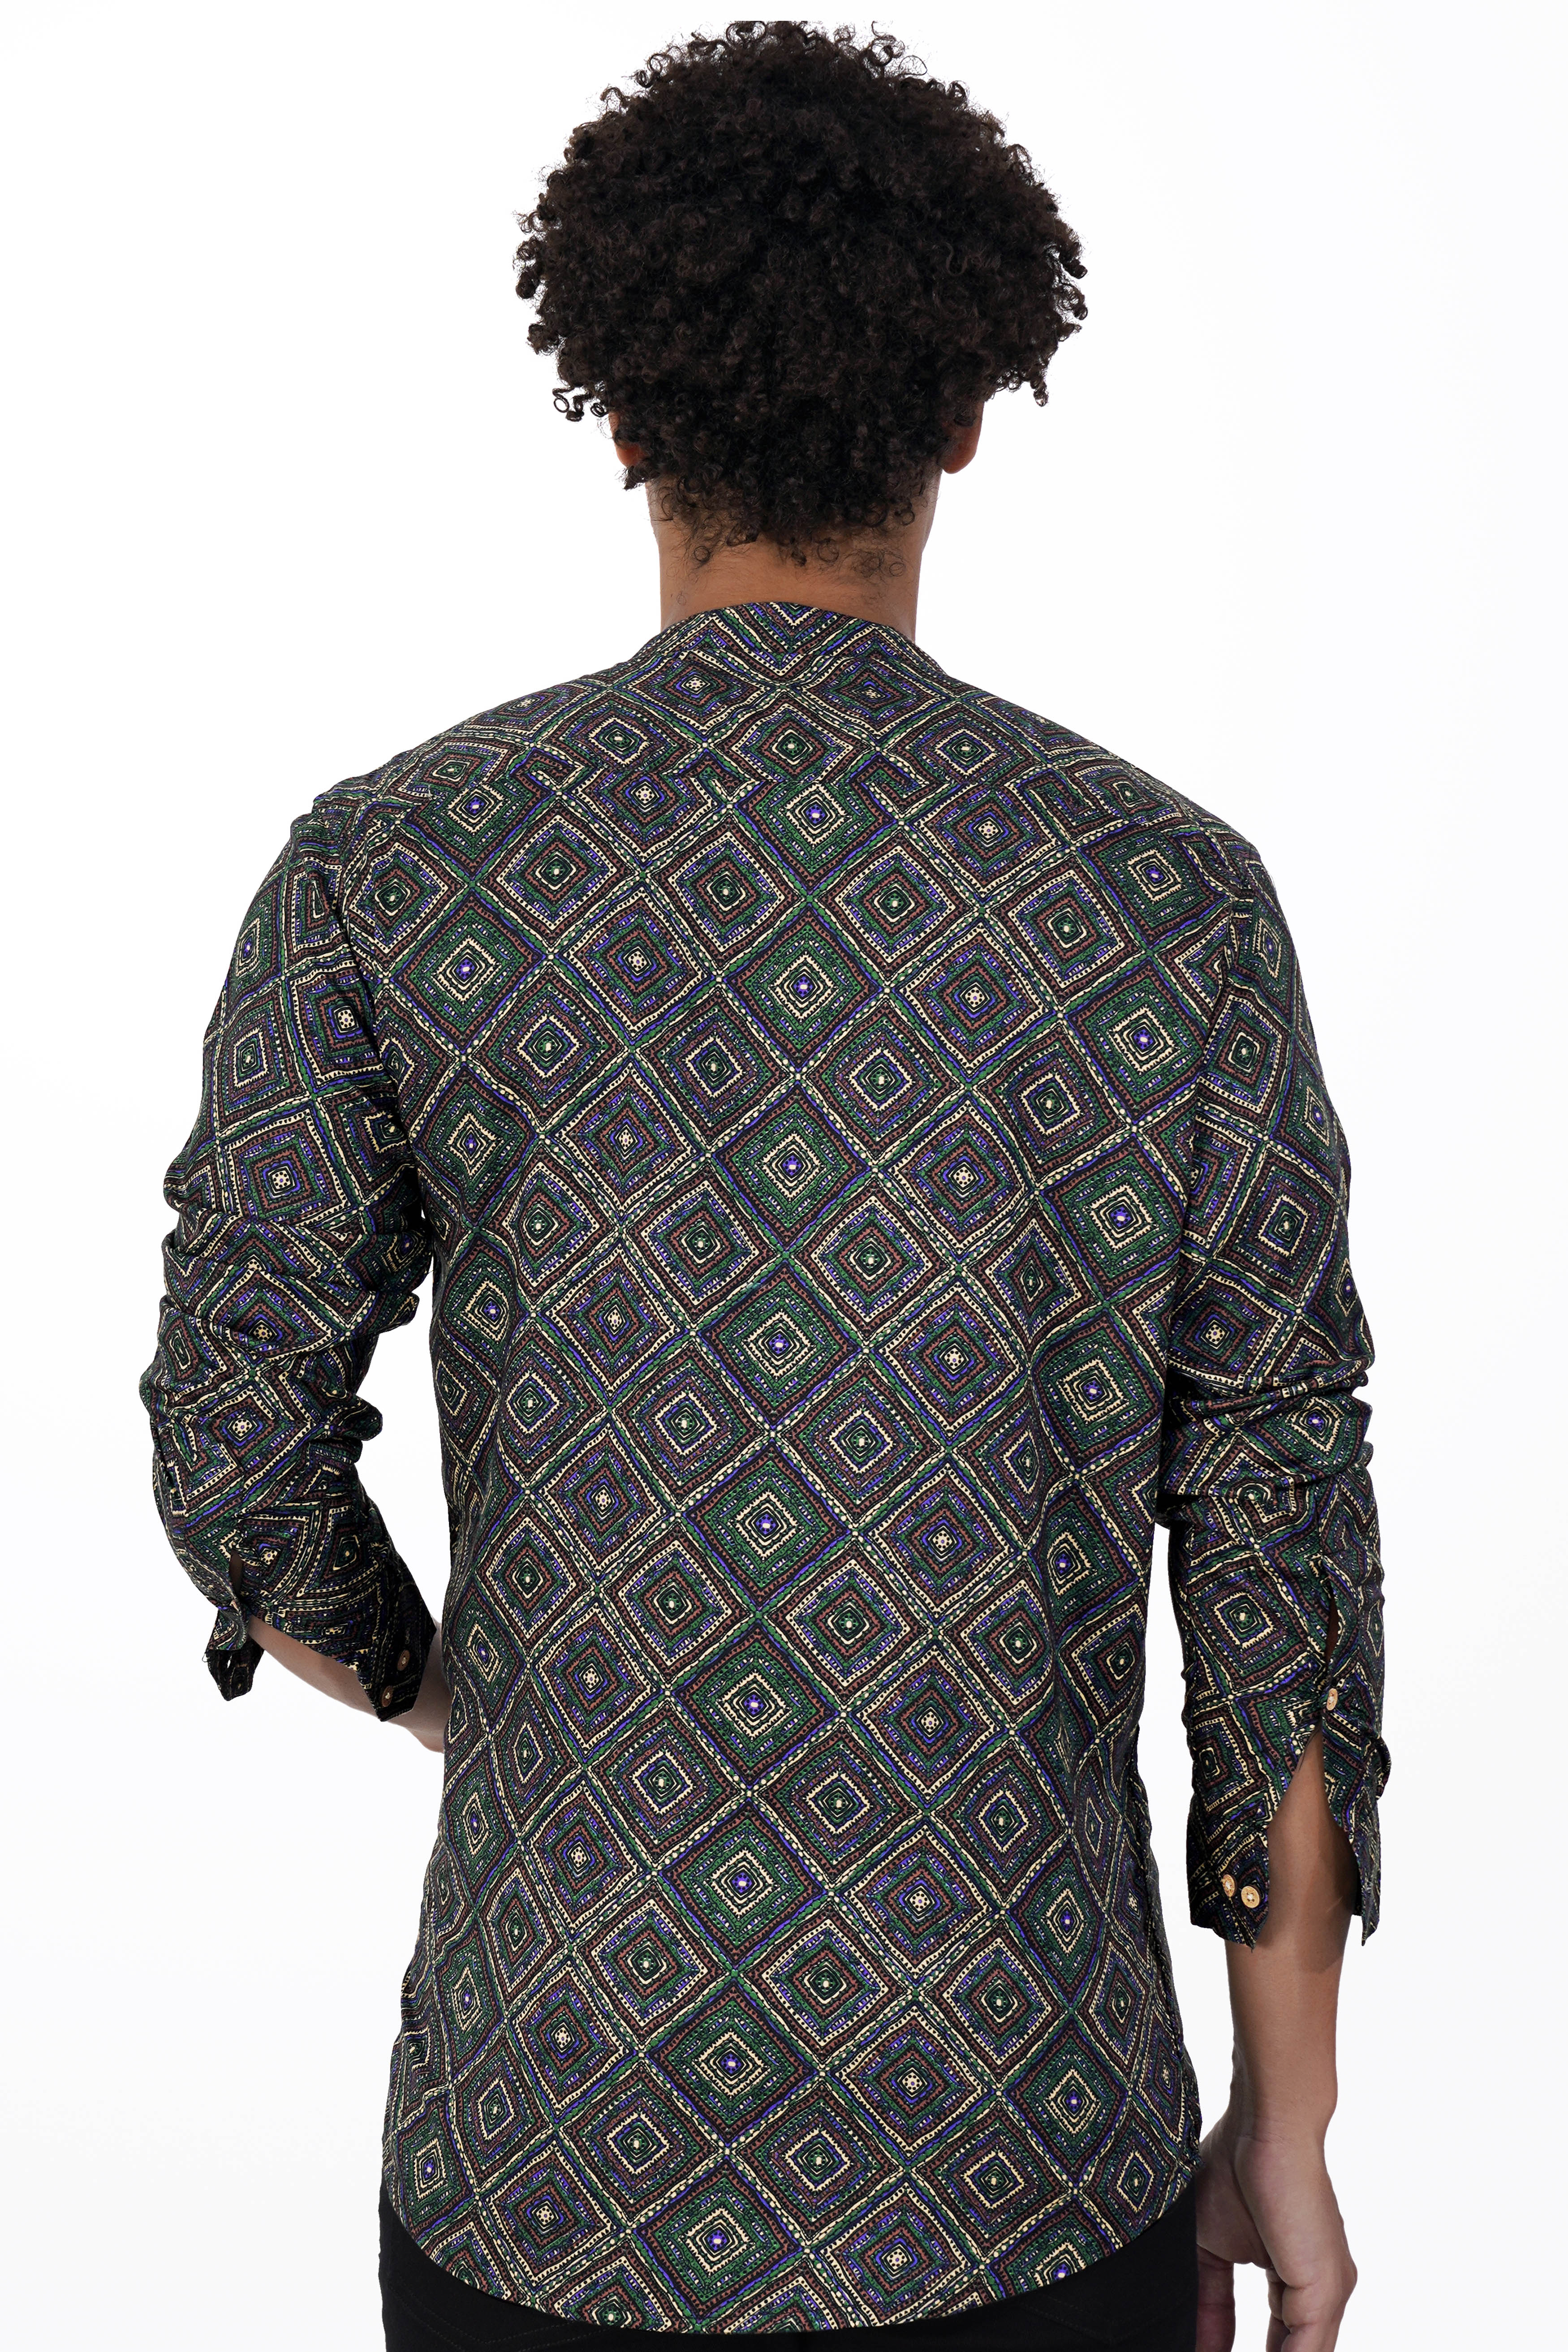 Phthalo Green with Russet Brown Multicolour Printed Premium Tencel Kurta Shirt